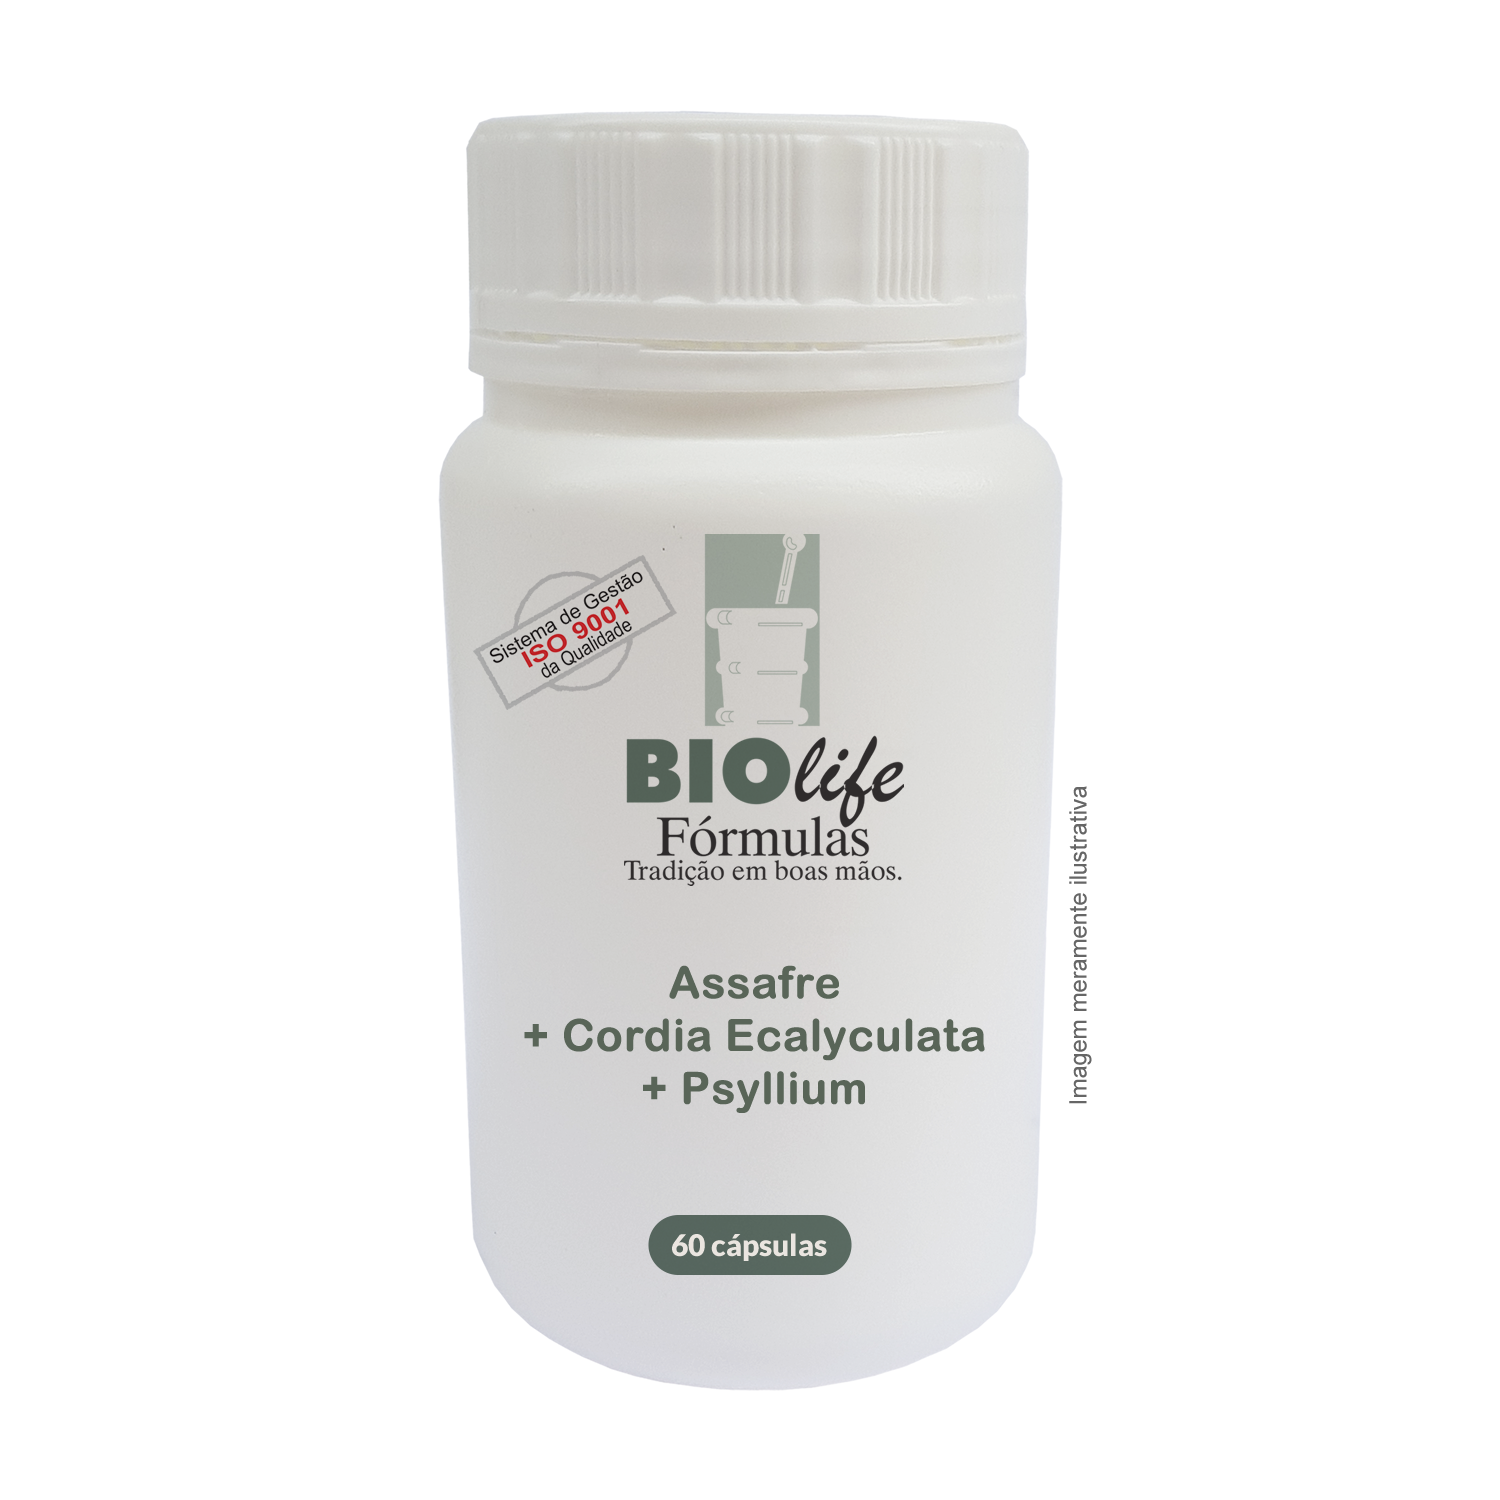 Assafre 100mg + Cordia Ecalyculata 300mg + Psylium 400mg - BioLife